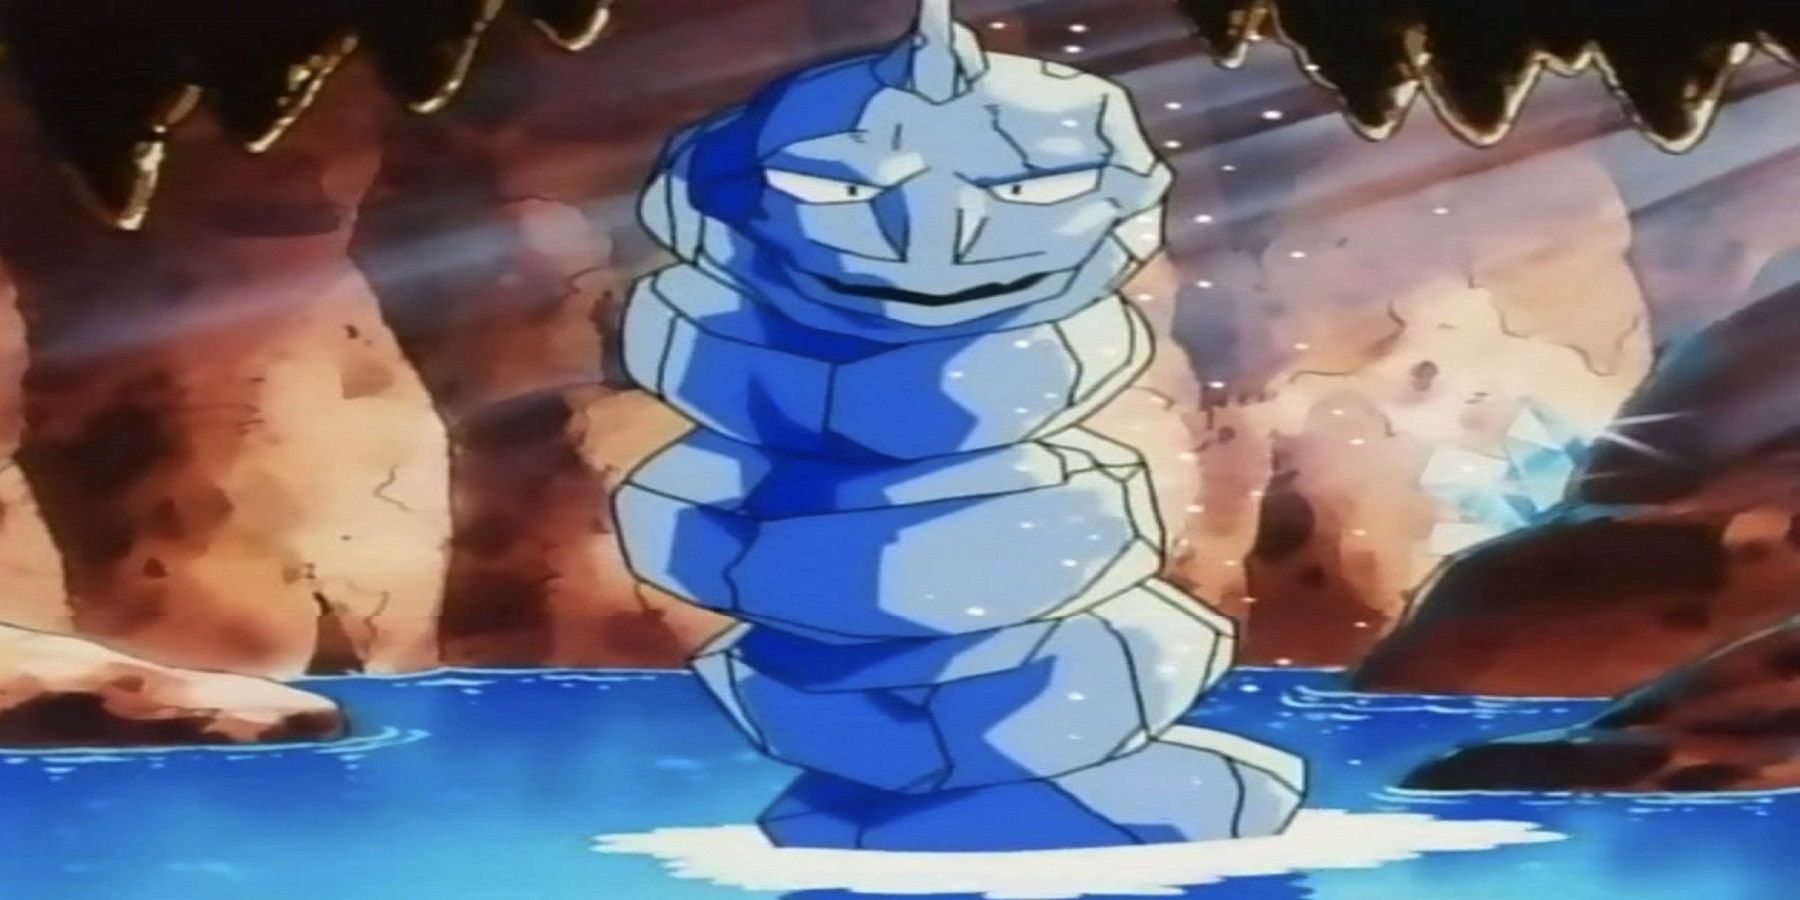 Crystal onix  Pokémon Amino